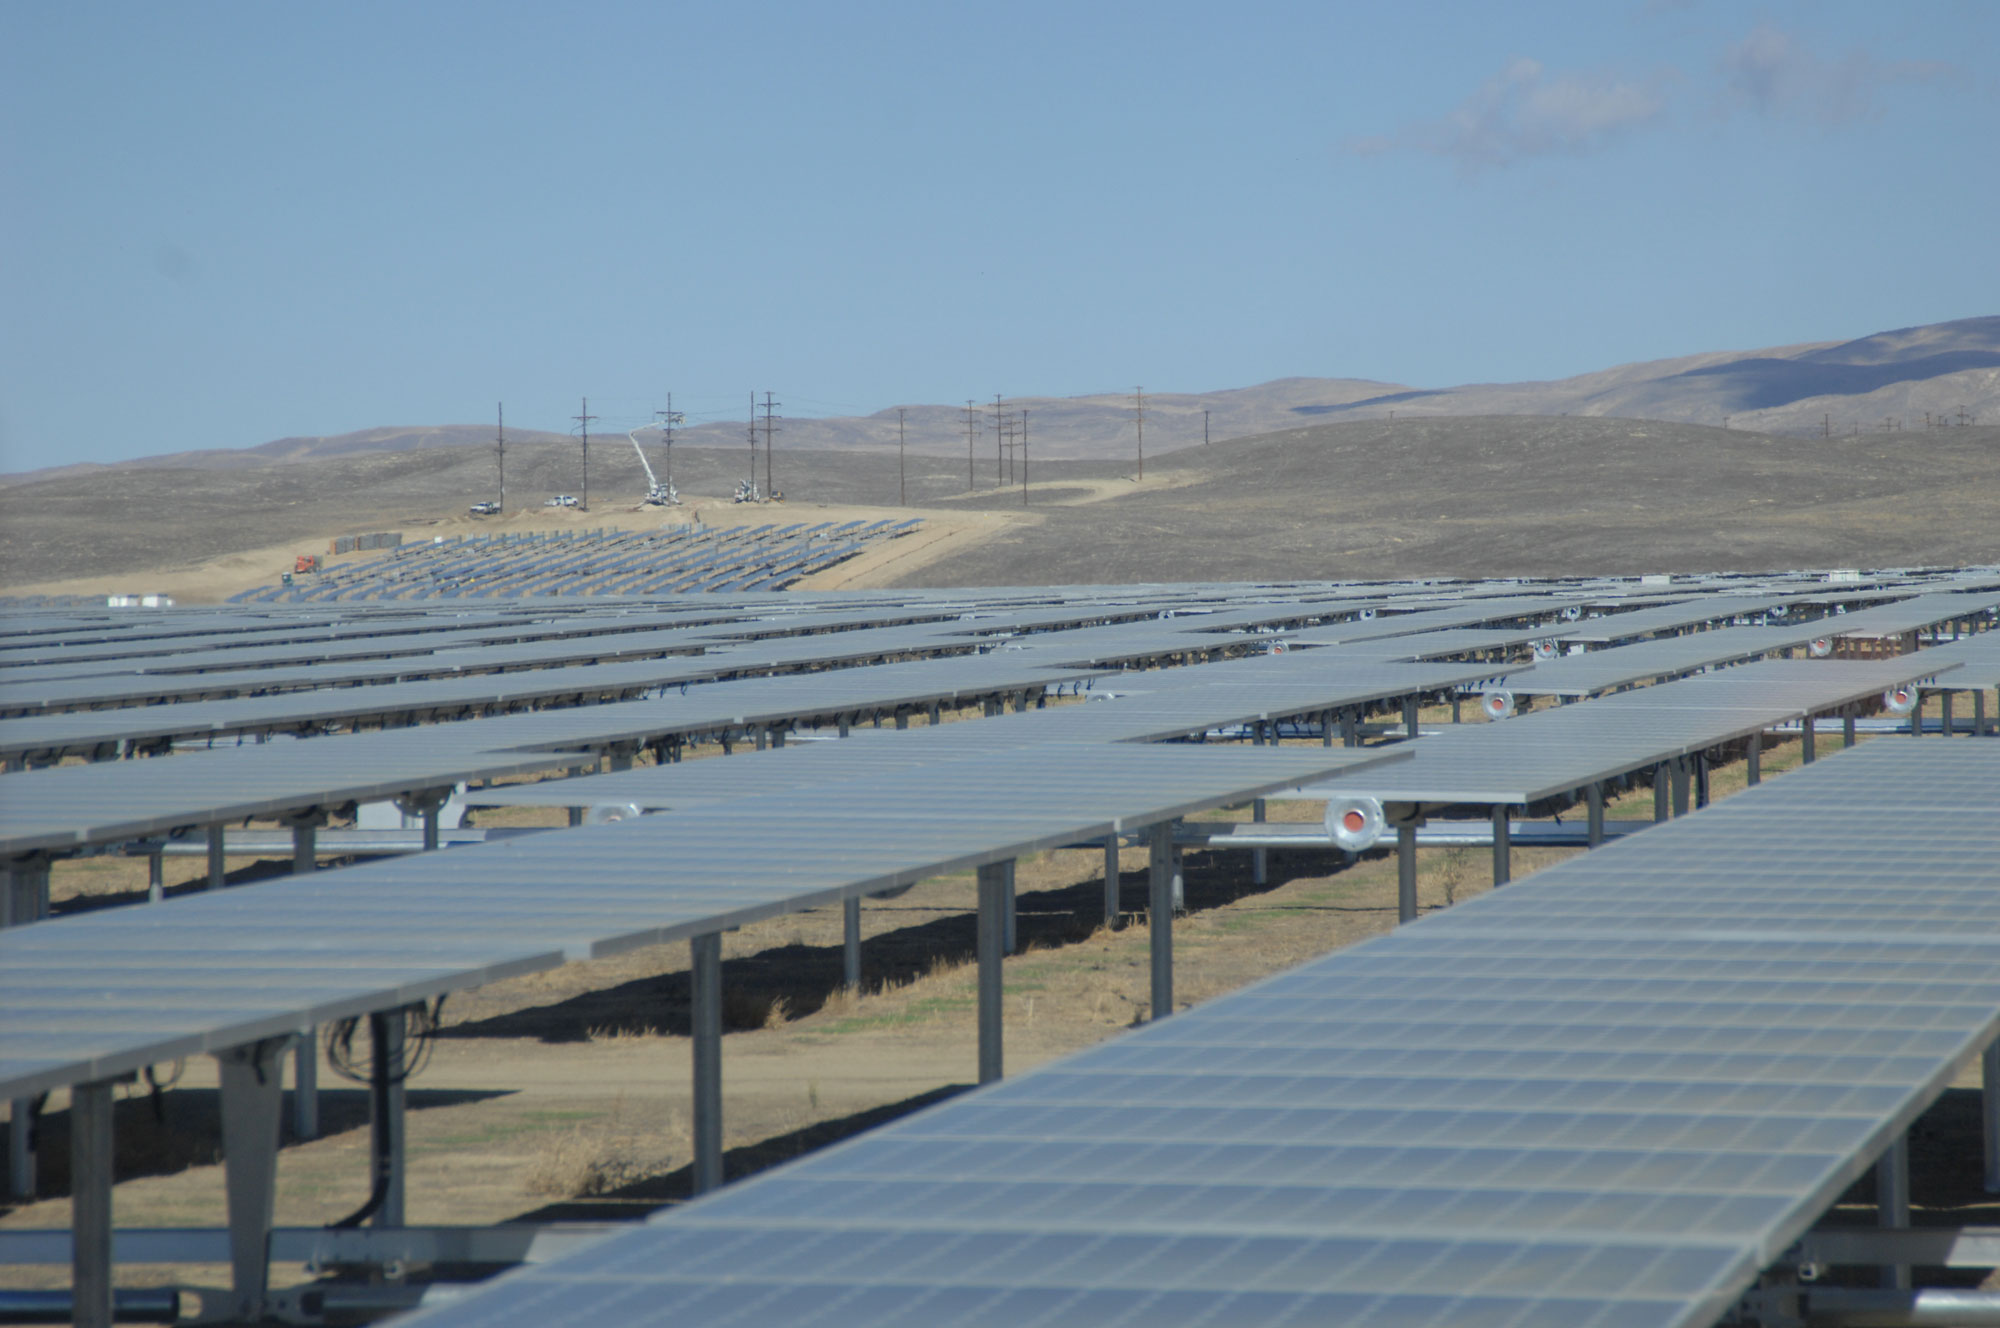 Photograph of solar panels of the California Valley Solar Ranch in San Luis Obispo County, California.